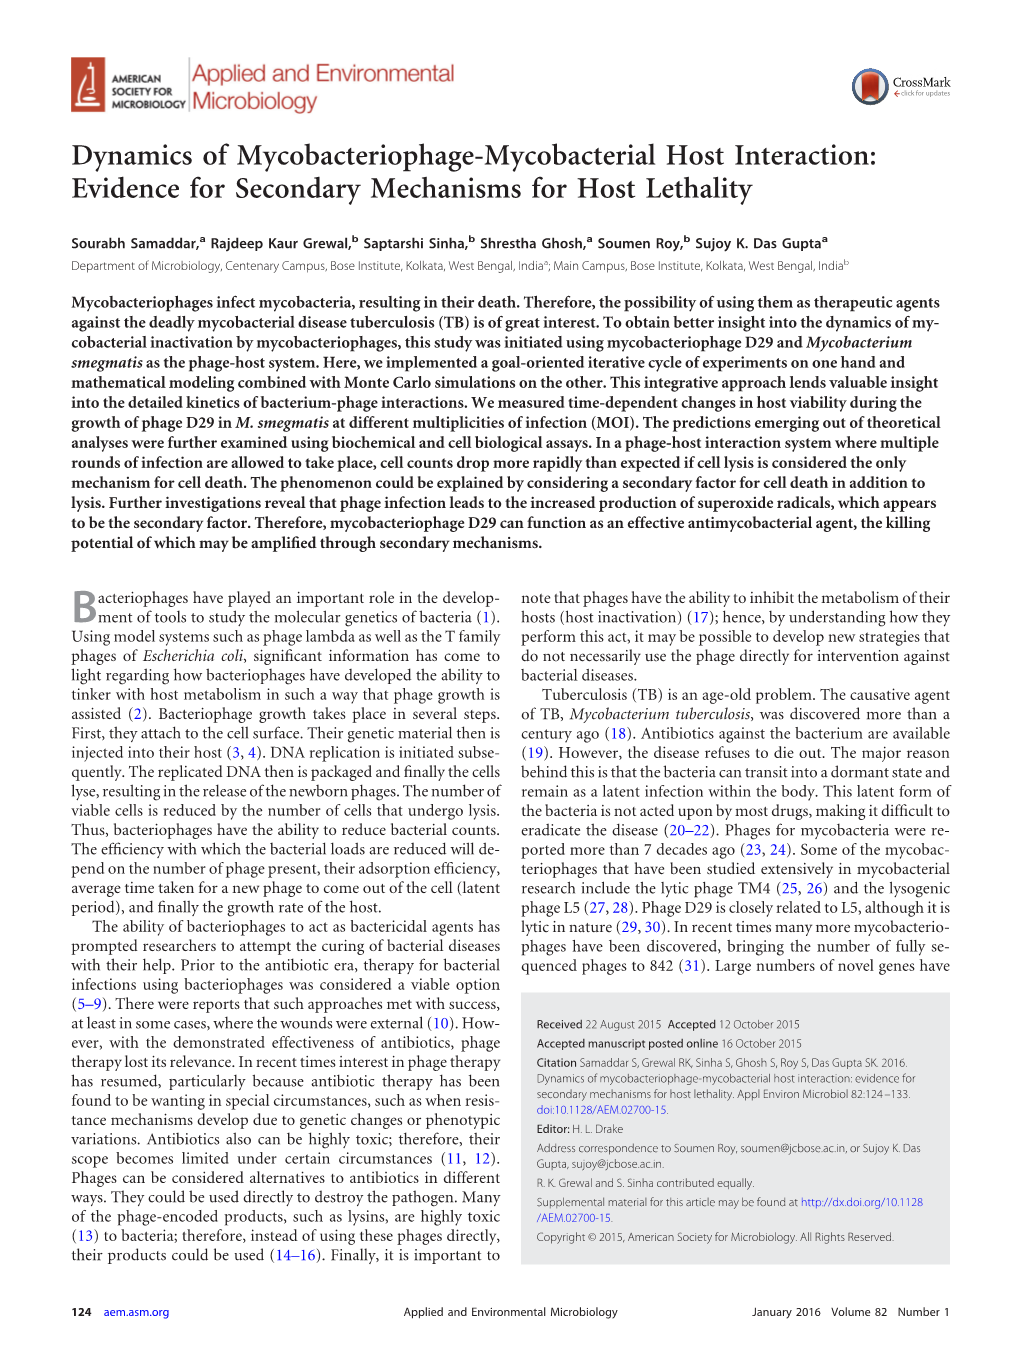 Evidence for Secondary Mechanisms for Host Lethality